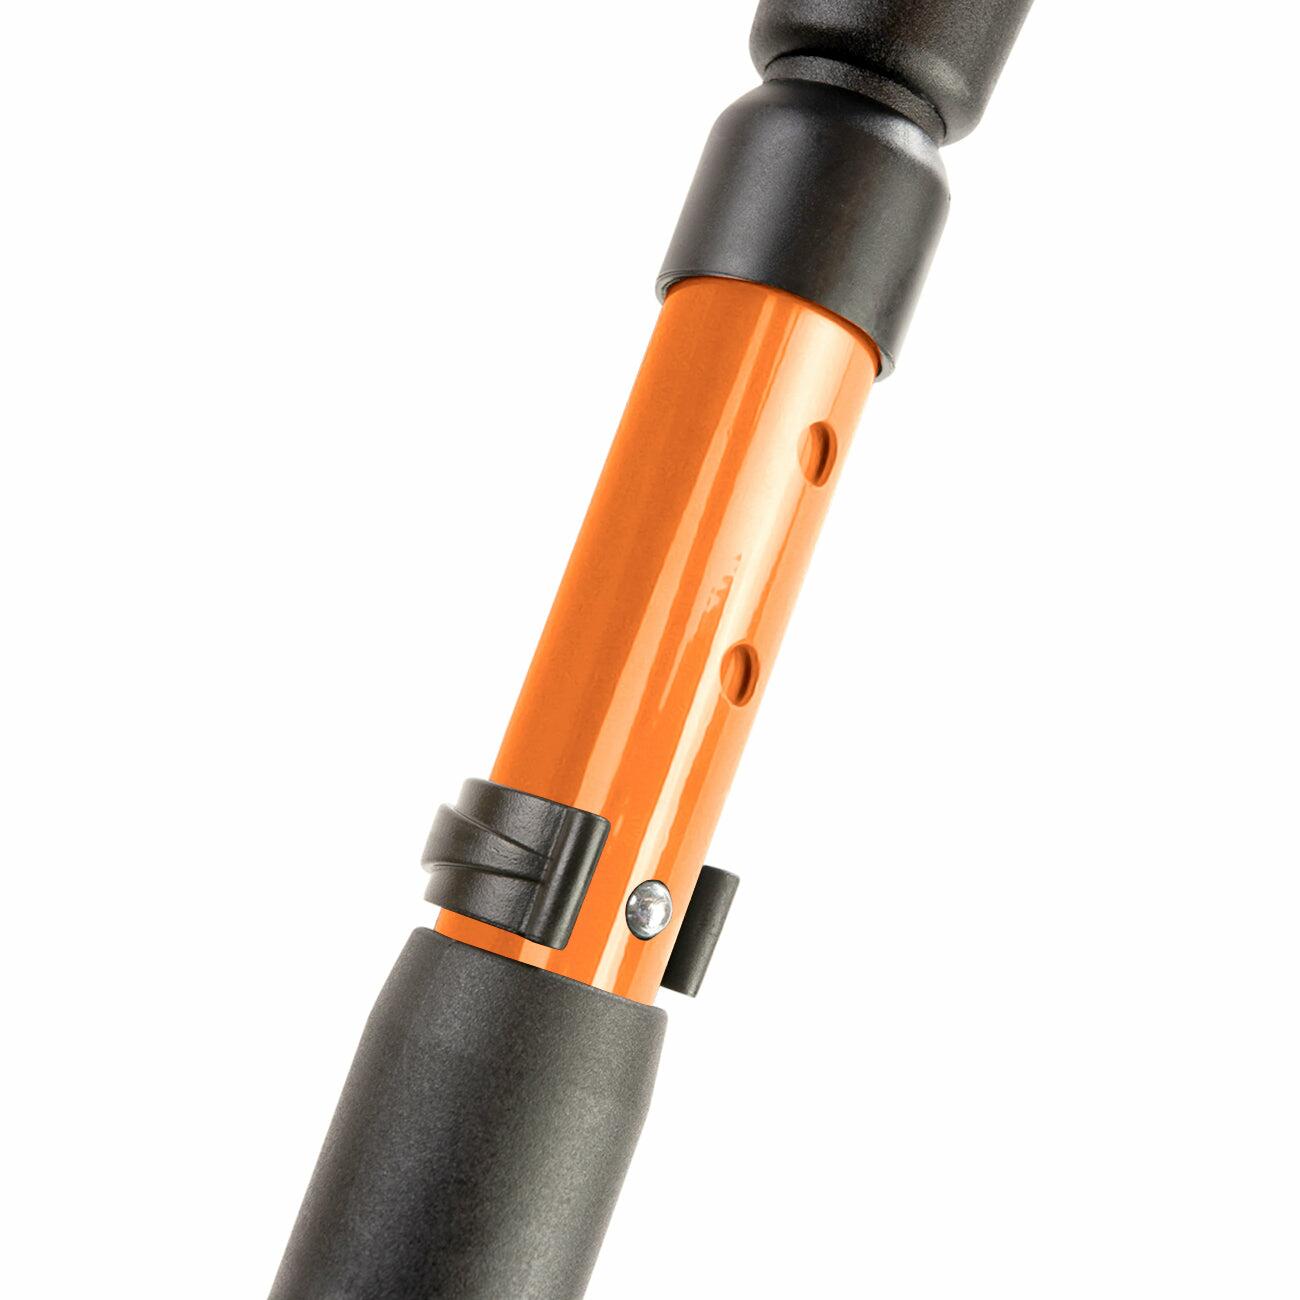 How to adjust an orange Flexyfoot Comfort Grip Double Adjustable Crutch